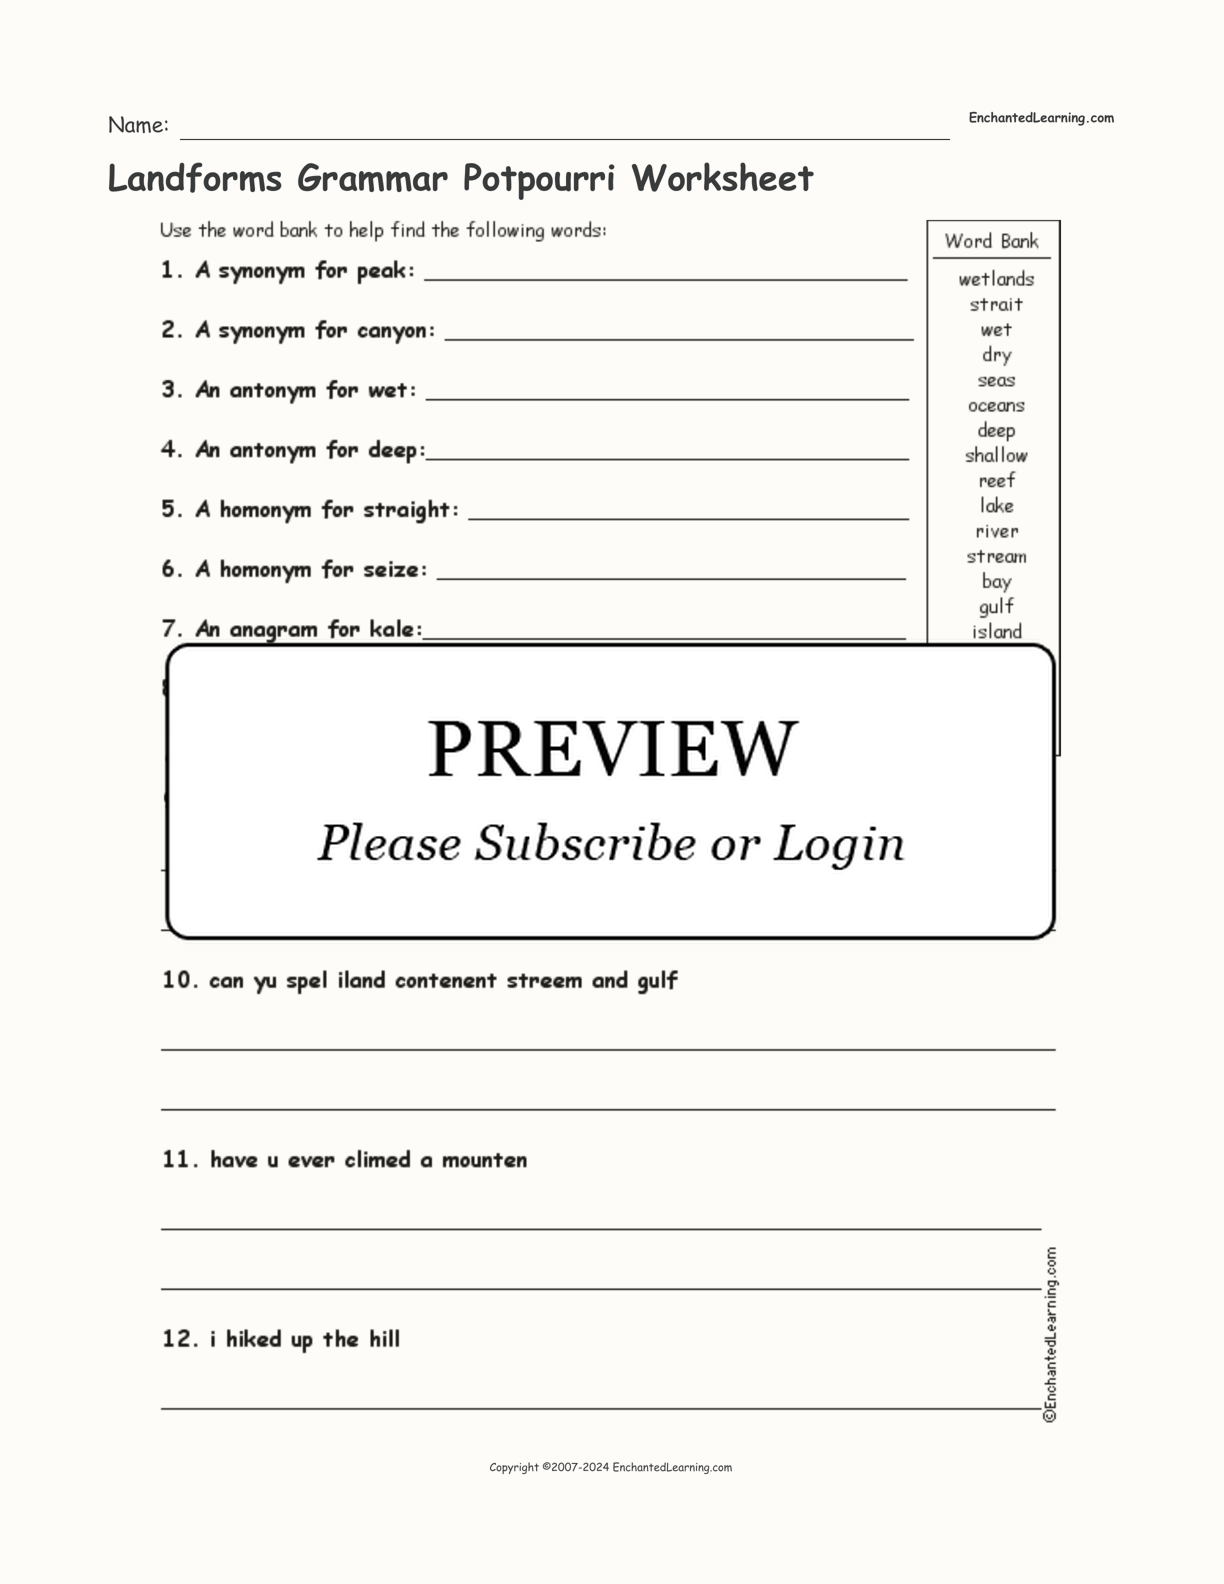 Landforms Grammar Potpourri Worksheet interactive worksheet page 1